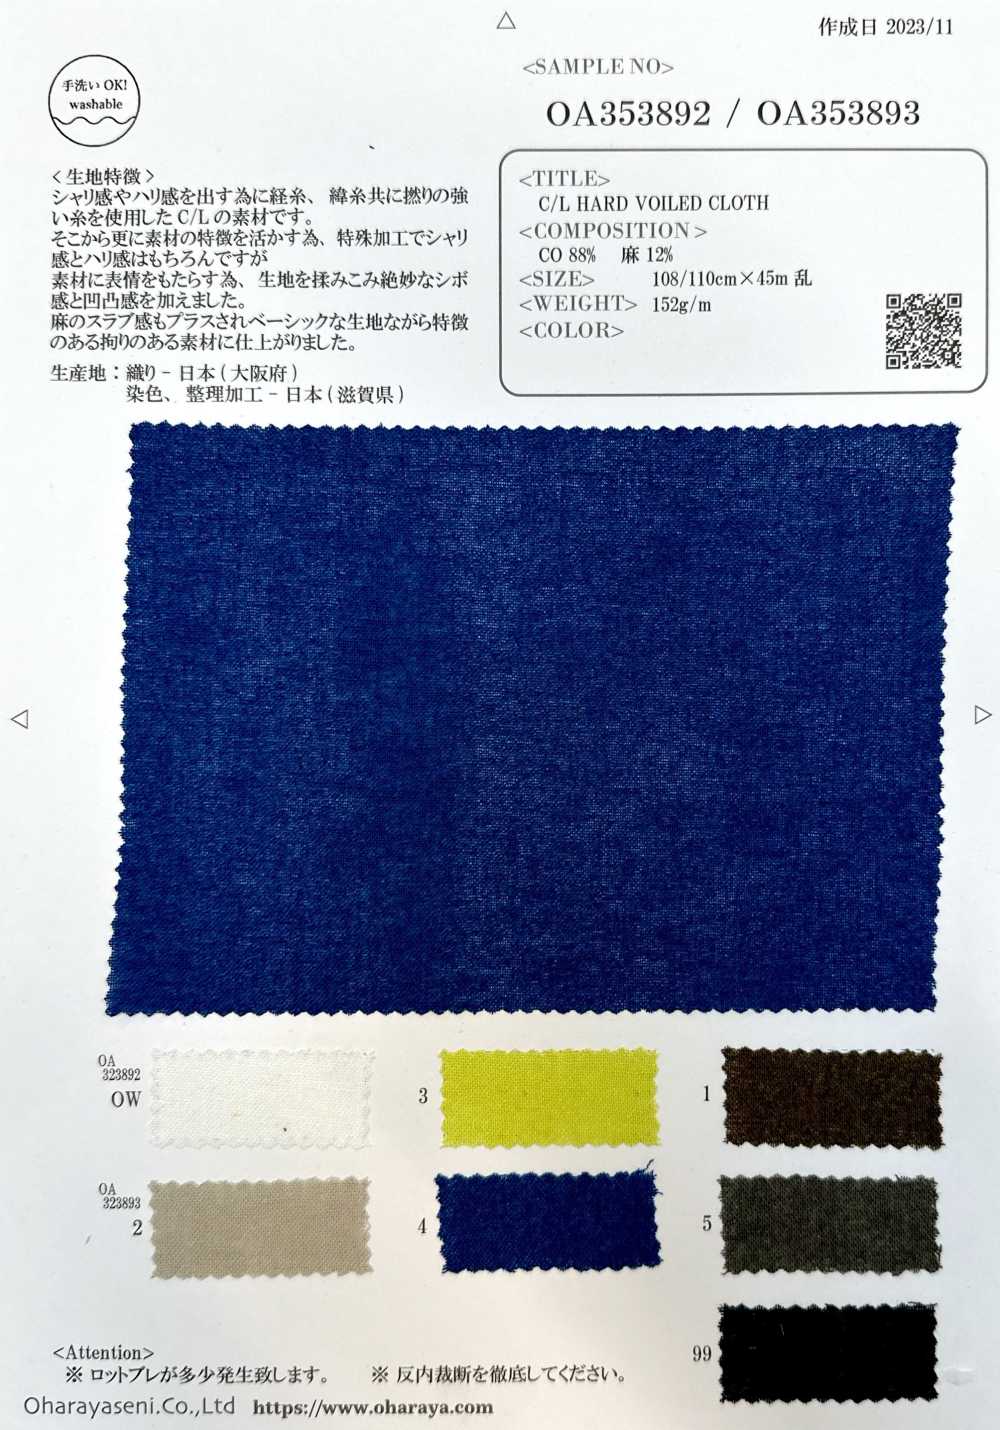 OA353893 C/L 硬質髒布[面料] 小原屋繊維